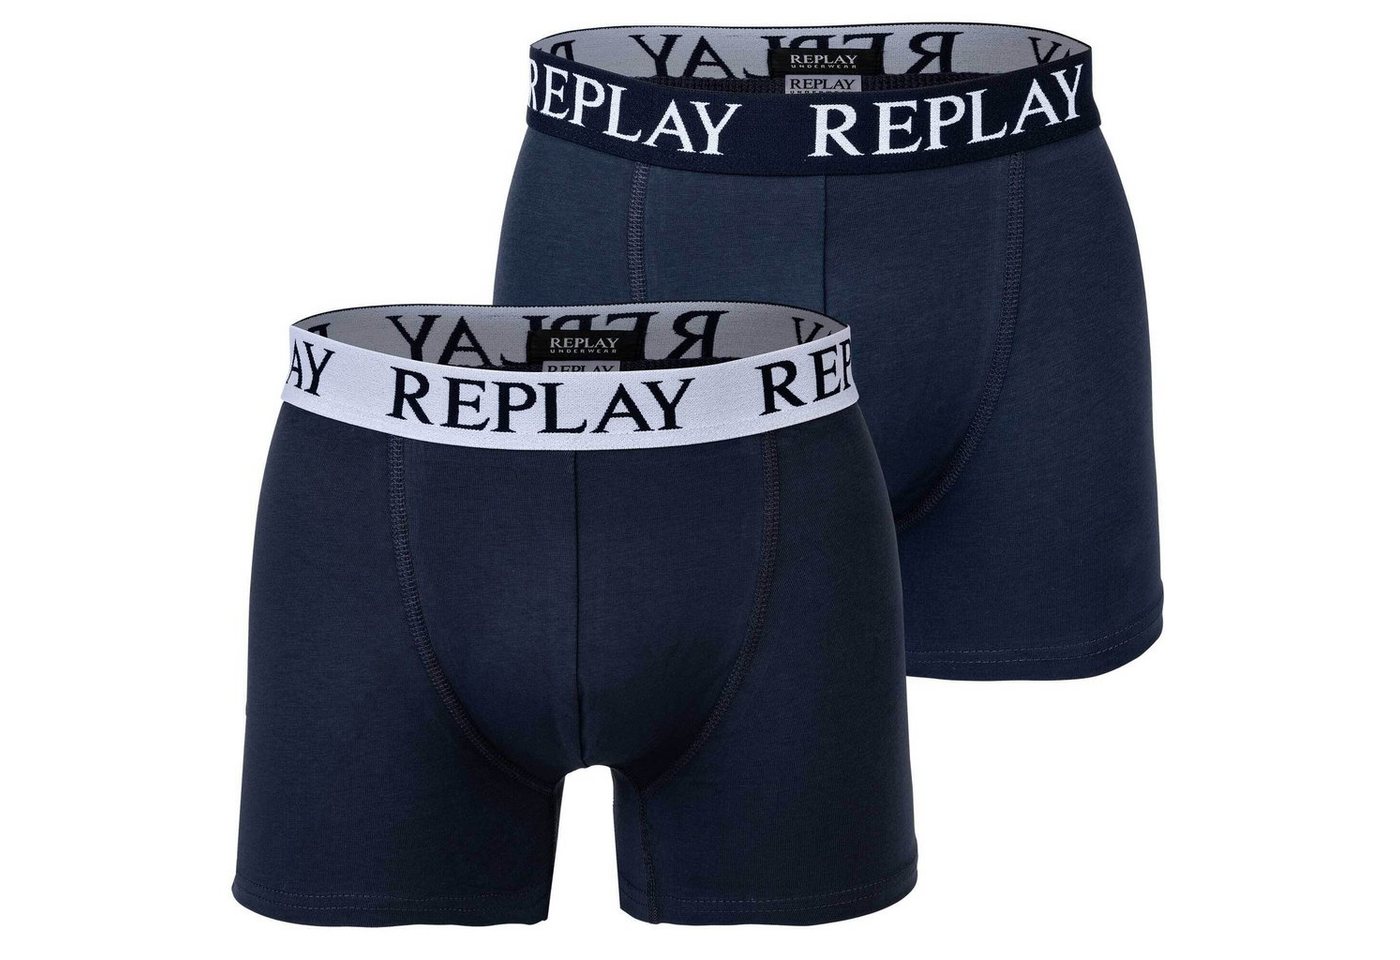 Replay Boxer Herren Boxer Shorts, 2er Pack - Trunks, Cotton von Replay